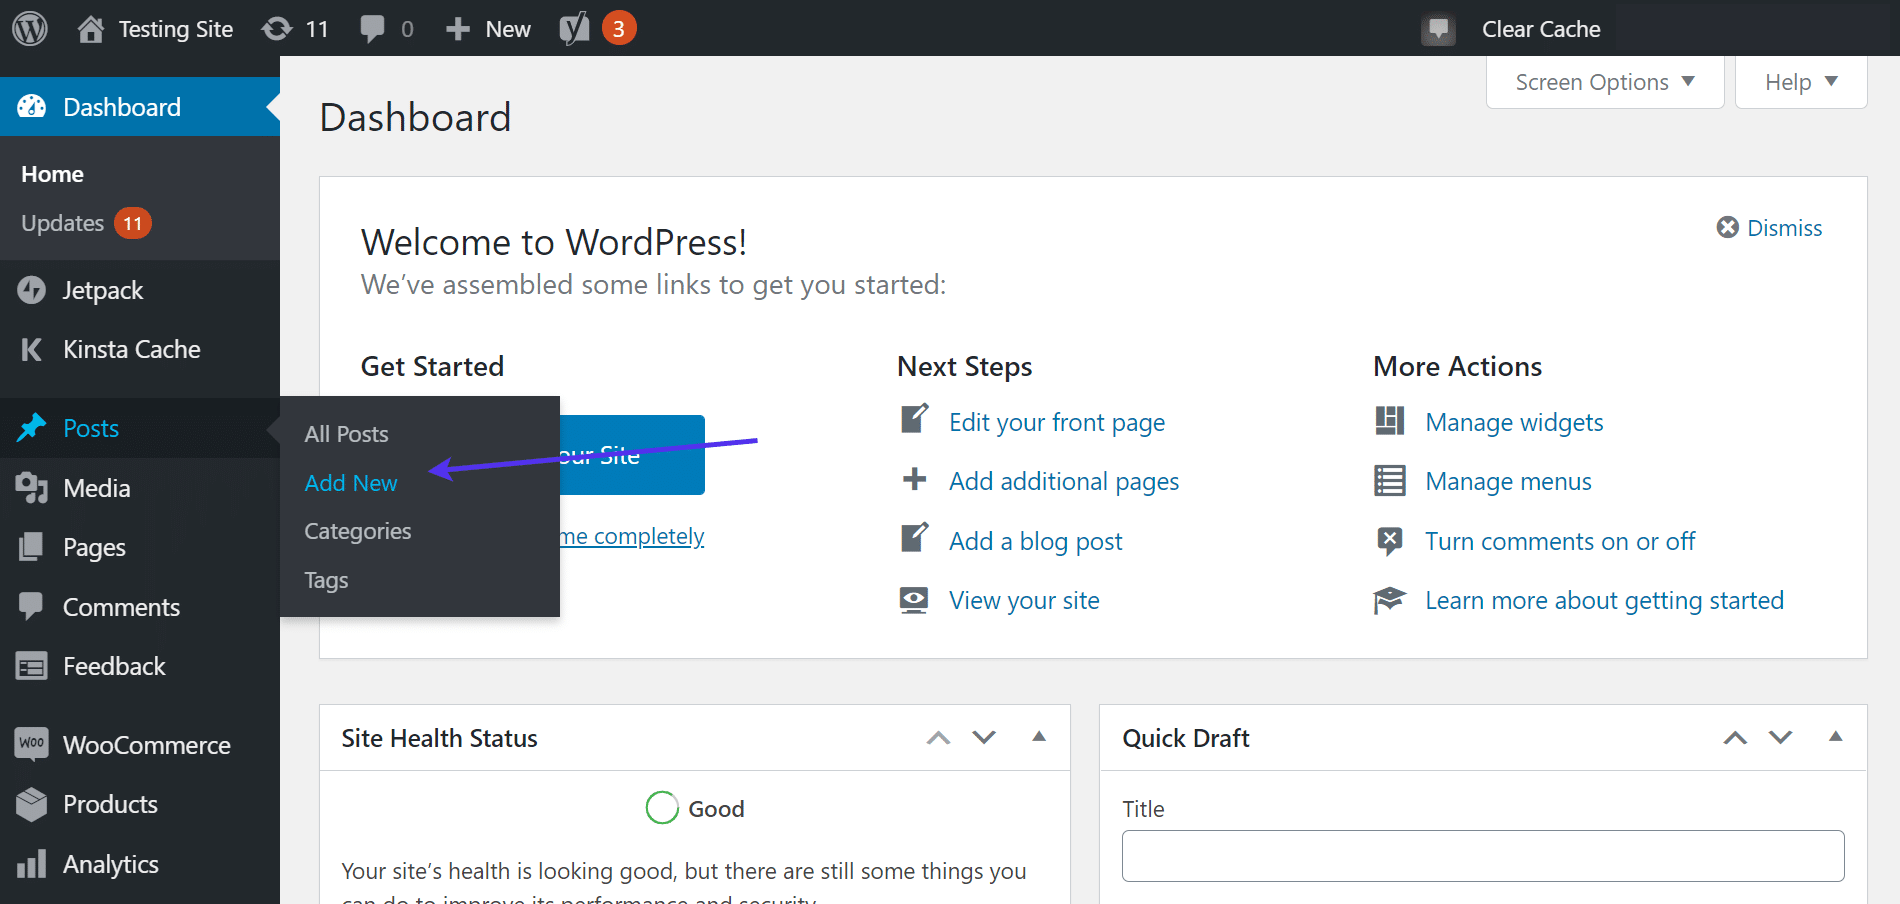 Posts > Add New link in WordPress dashboard